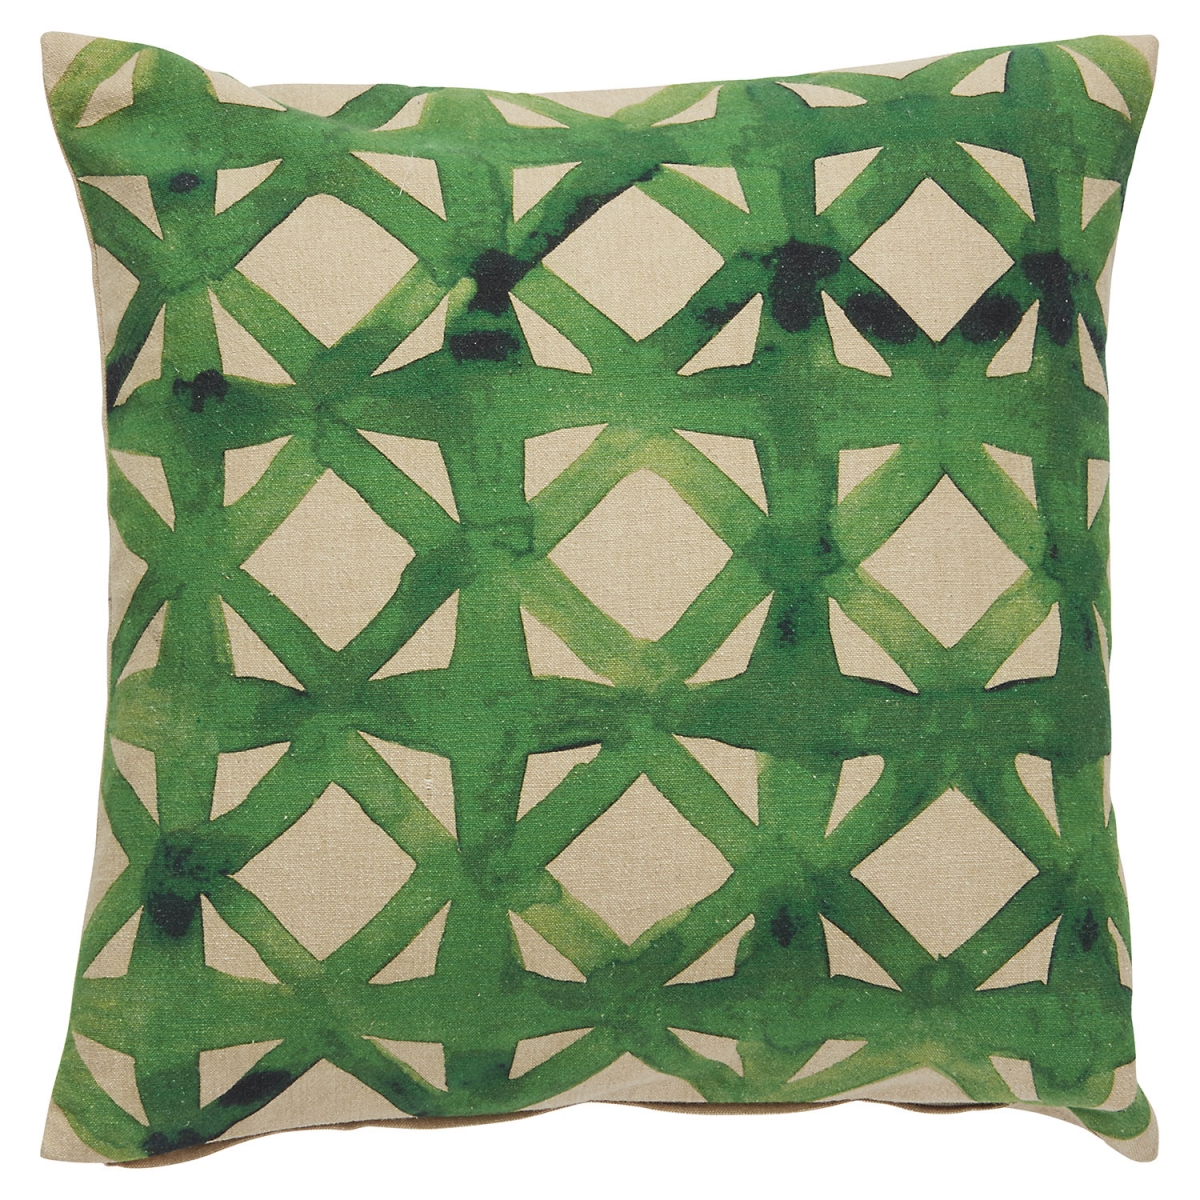 Plw102864 18 X 18 In. Verdigris Emerald Green & Beige Trellis Poly Throw Pillow